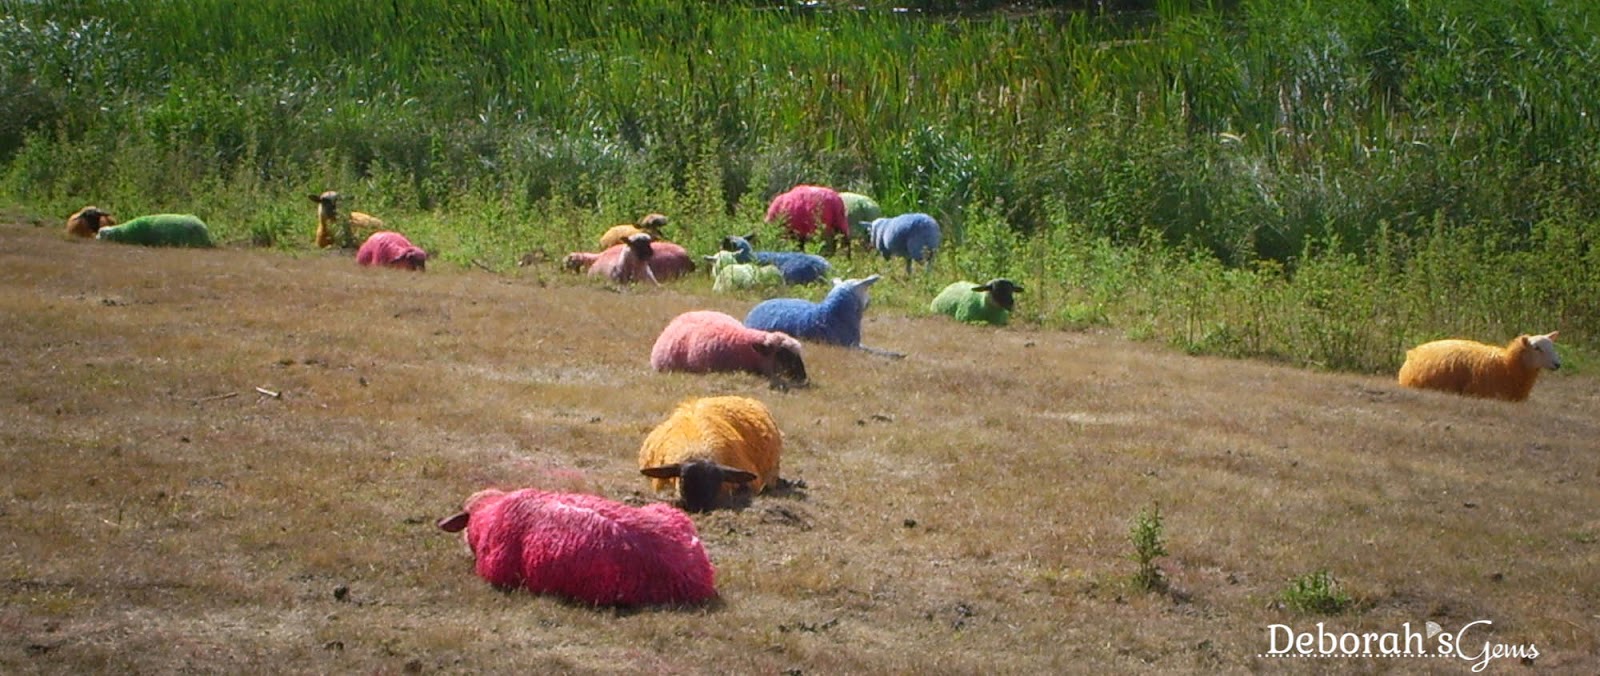 Coloured Sheep Latitude - photo by Deborah Frings - Deborah's Gems